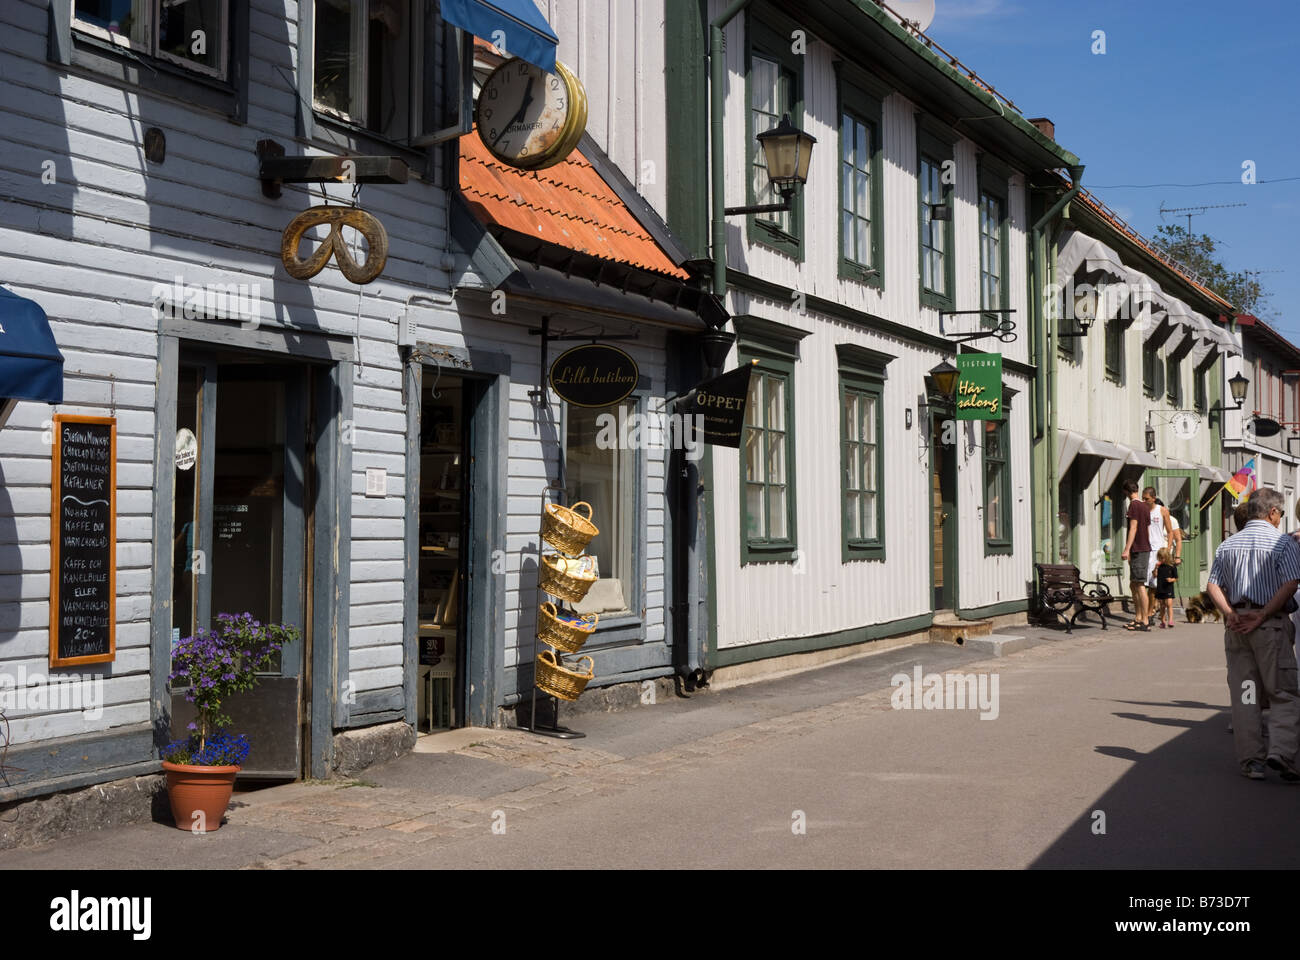 Main street in Sigtuna, Sweden Stock Photo